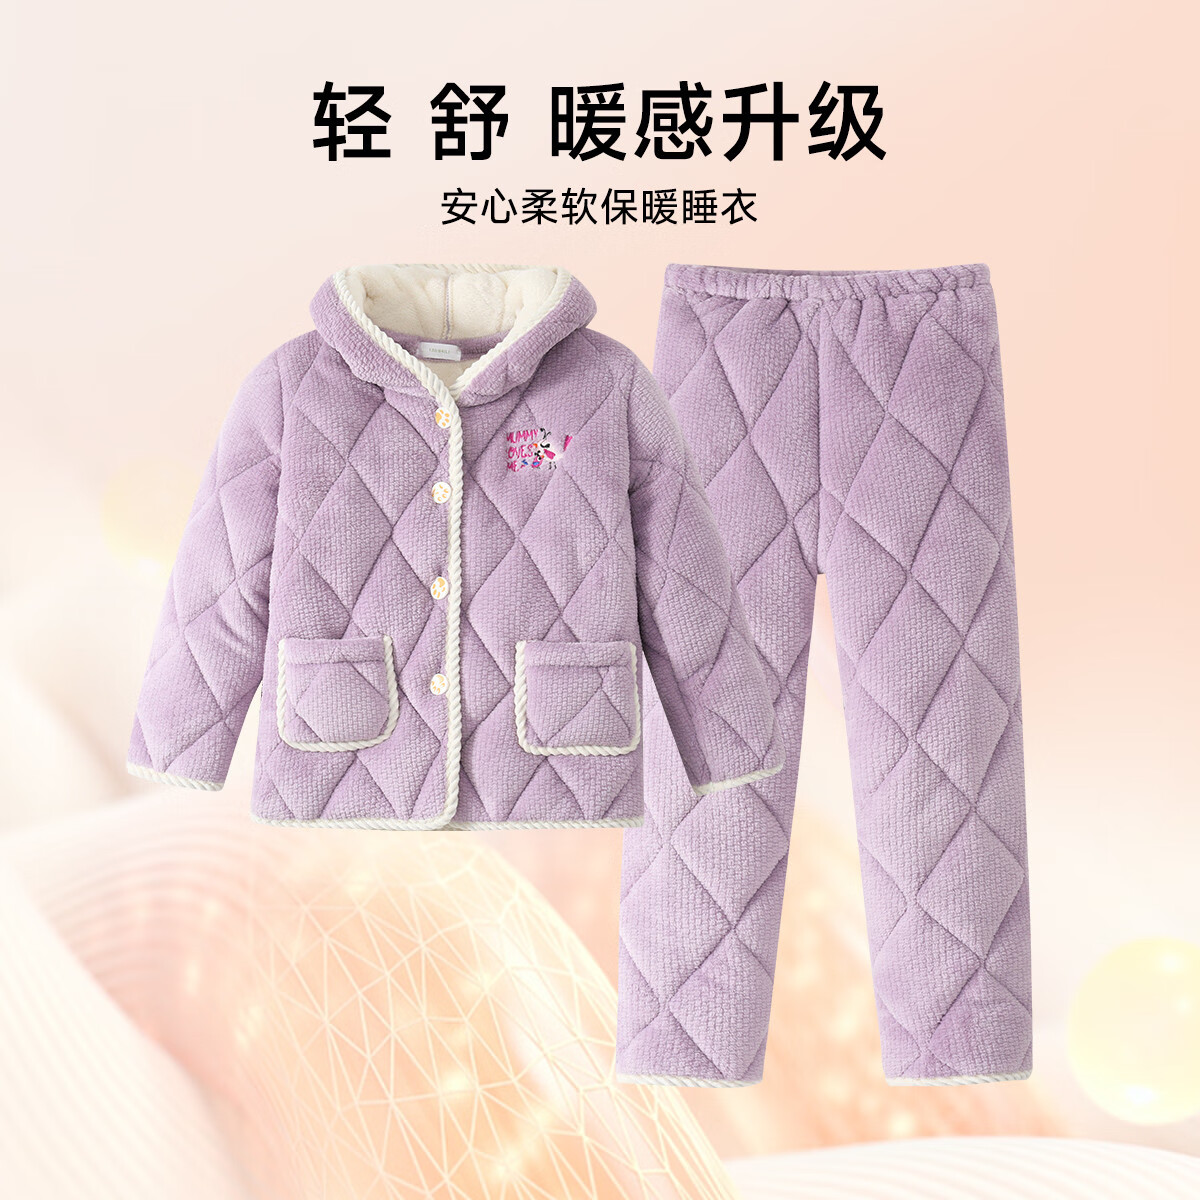 GOSO「三层夹棉加厚」儿童睡衣家居服套装 紫色 XL用户评价如何？详细使用感受报告？